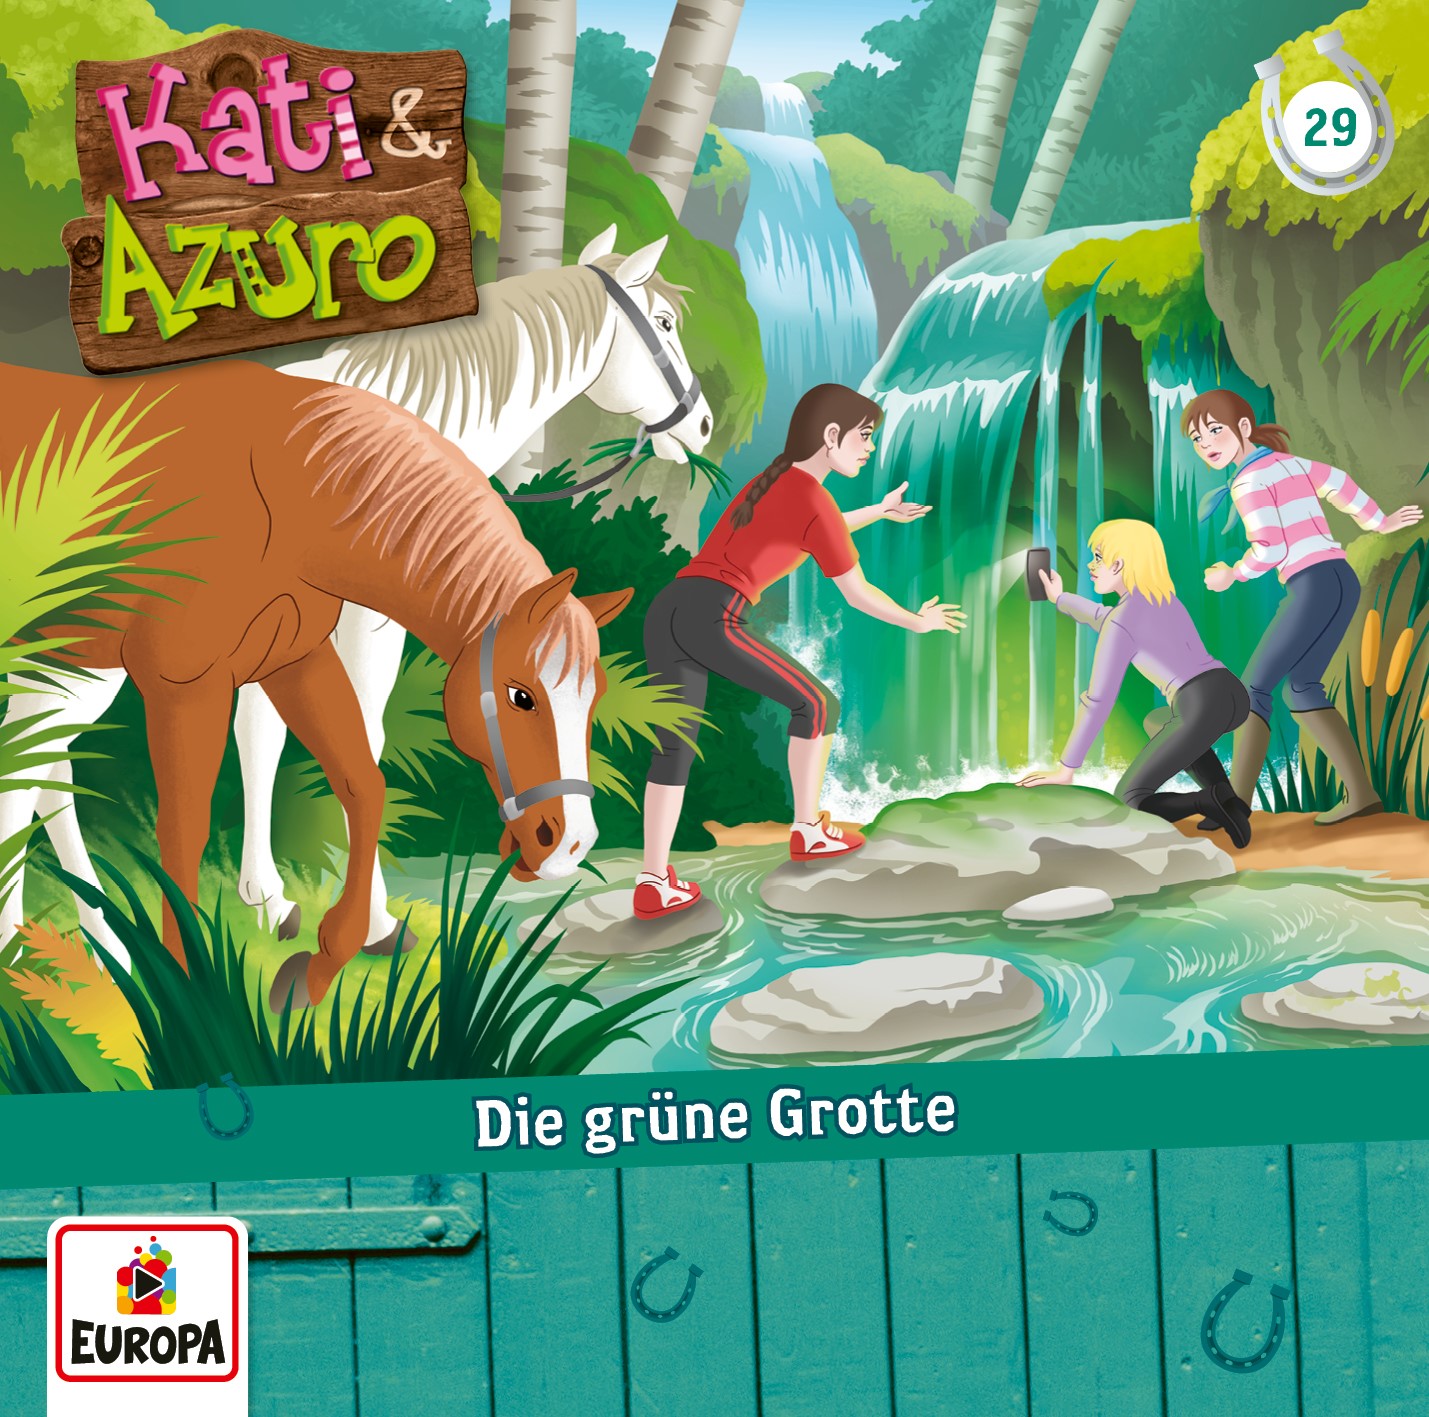 Kati & Azuro - Die grüne Grotte